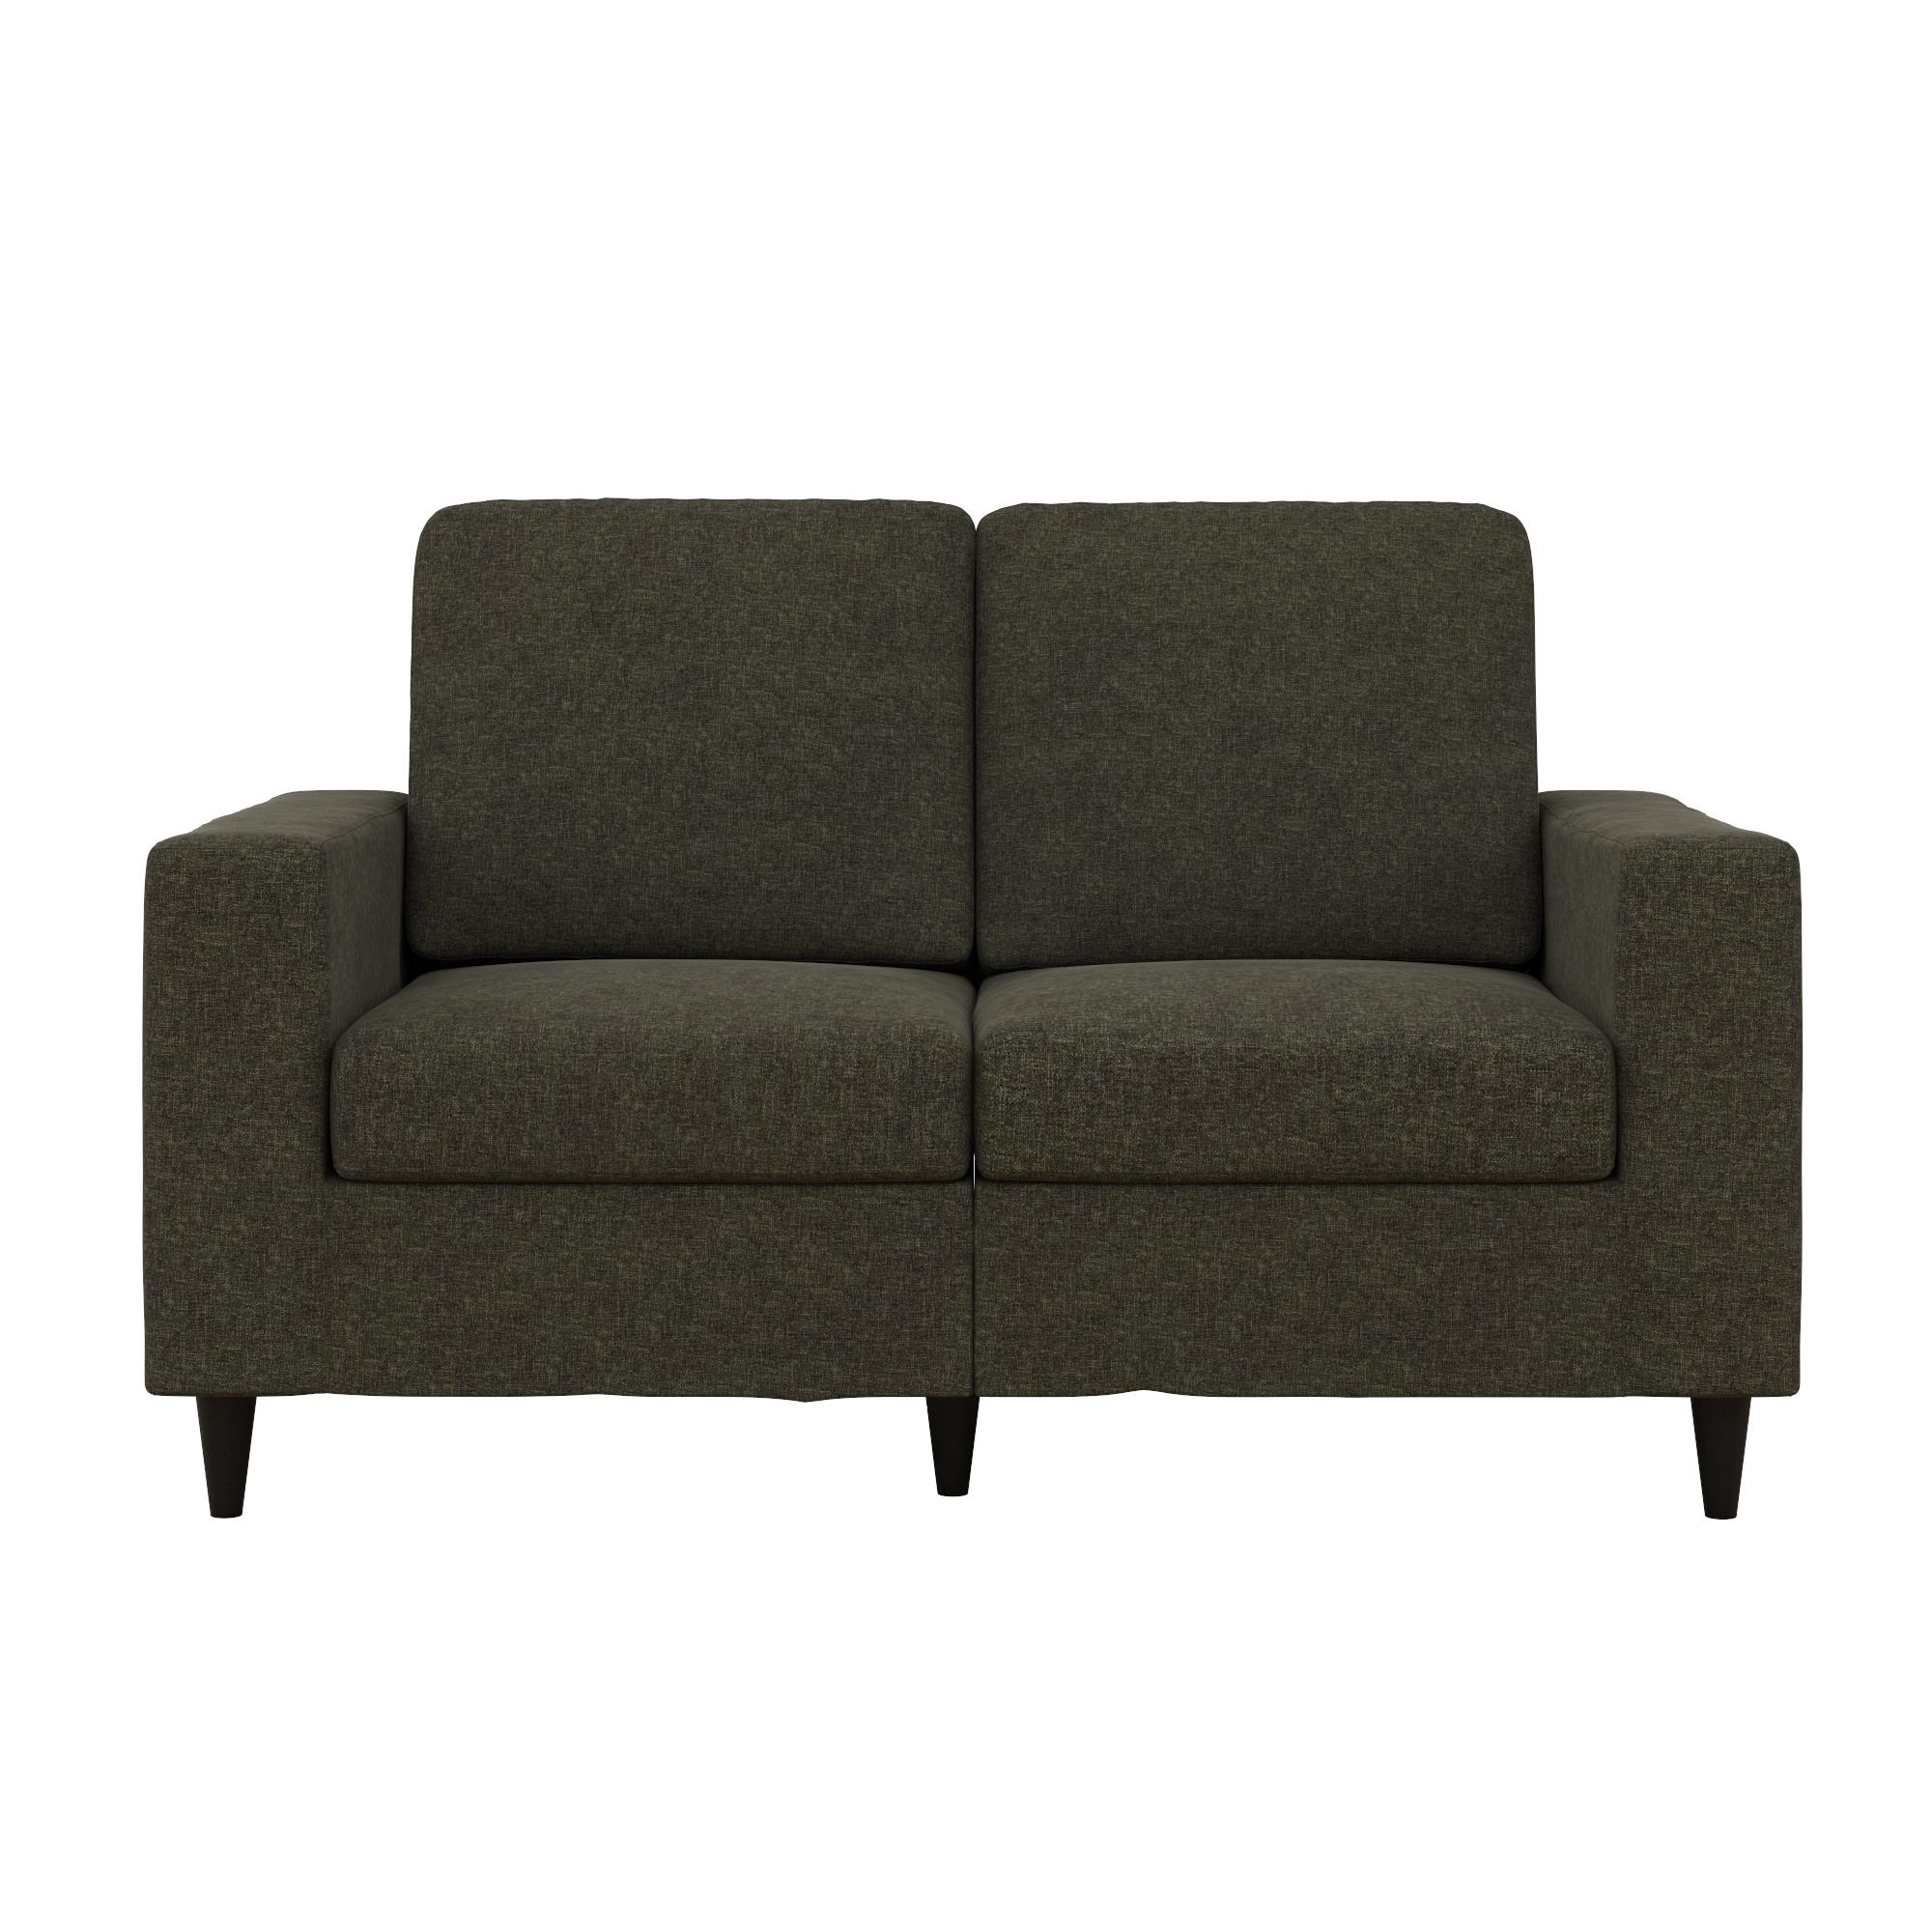 DHP Cooper Loveseat 2 Seater Sofa, Gray Linen - image 12 of 17